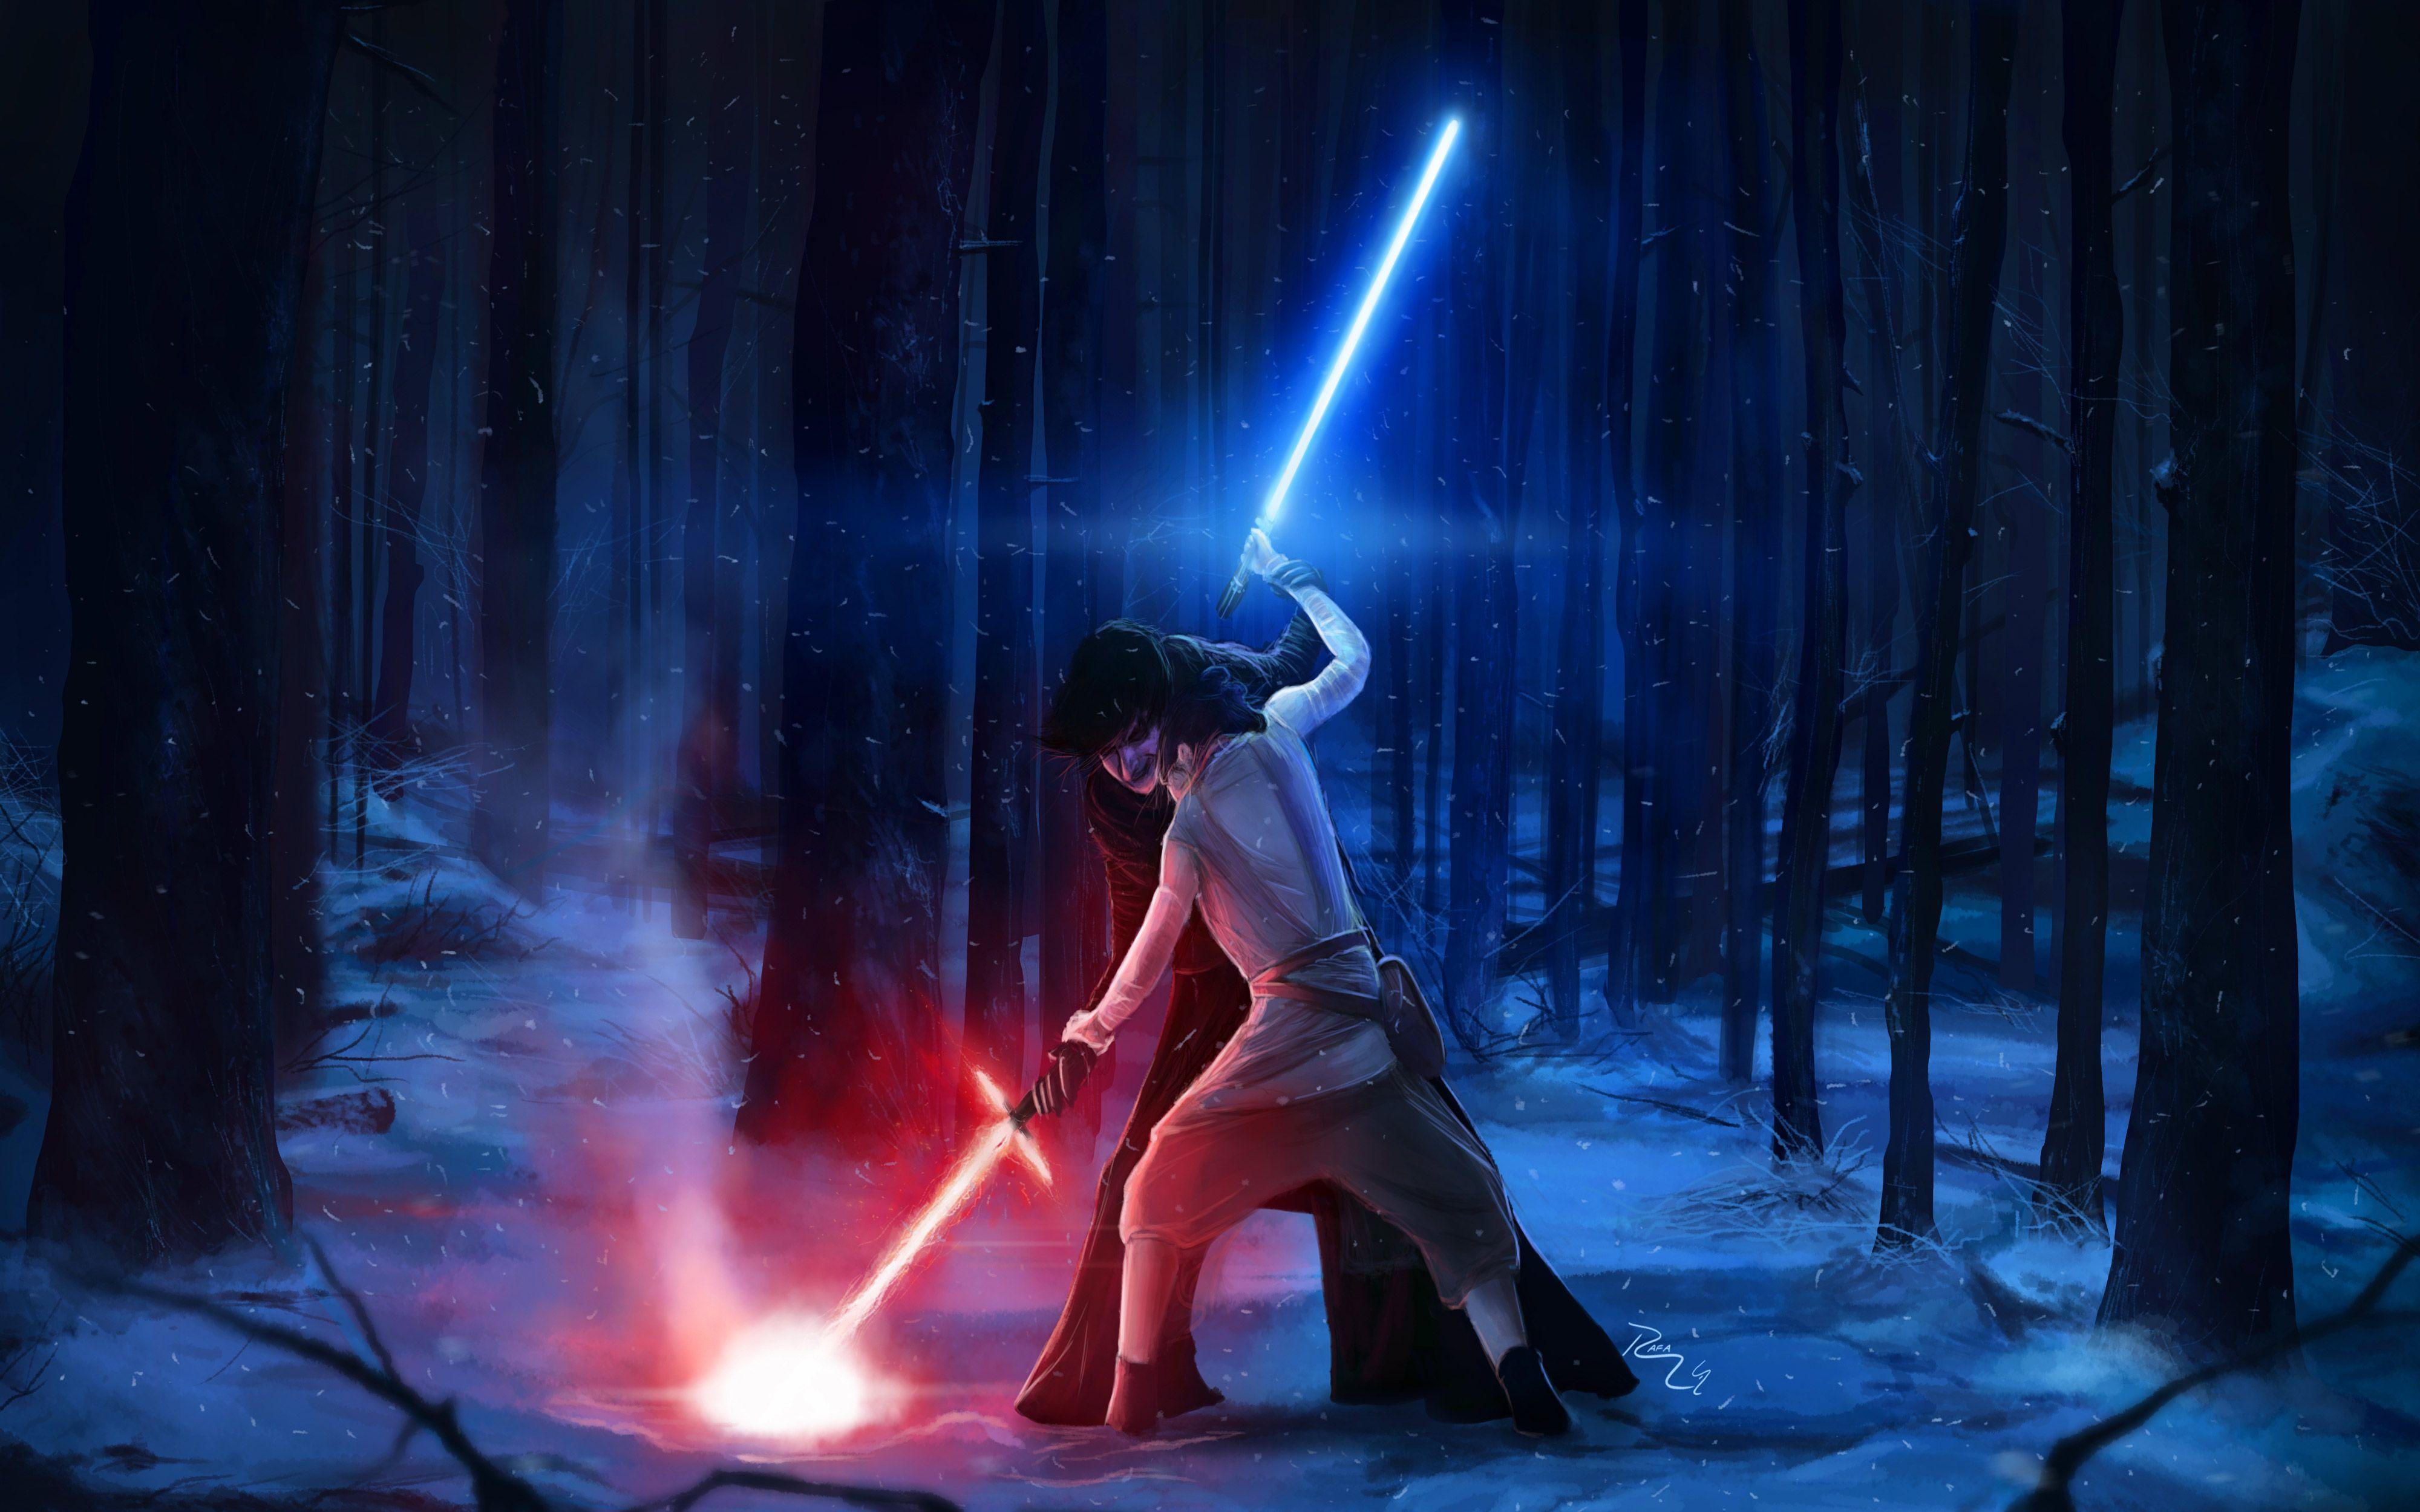 Star Wars The Force Awakens Kylo Ren Versus Rey Wallpaper. Free